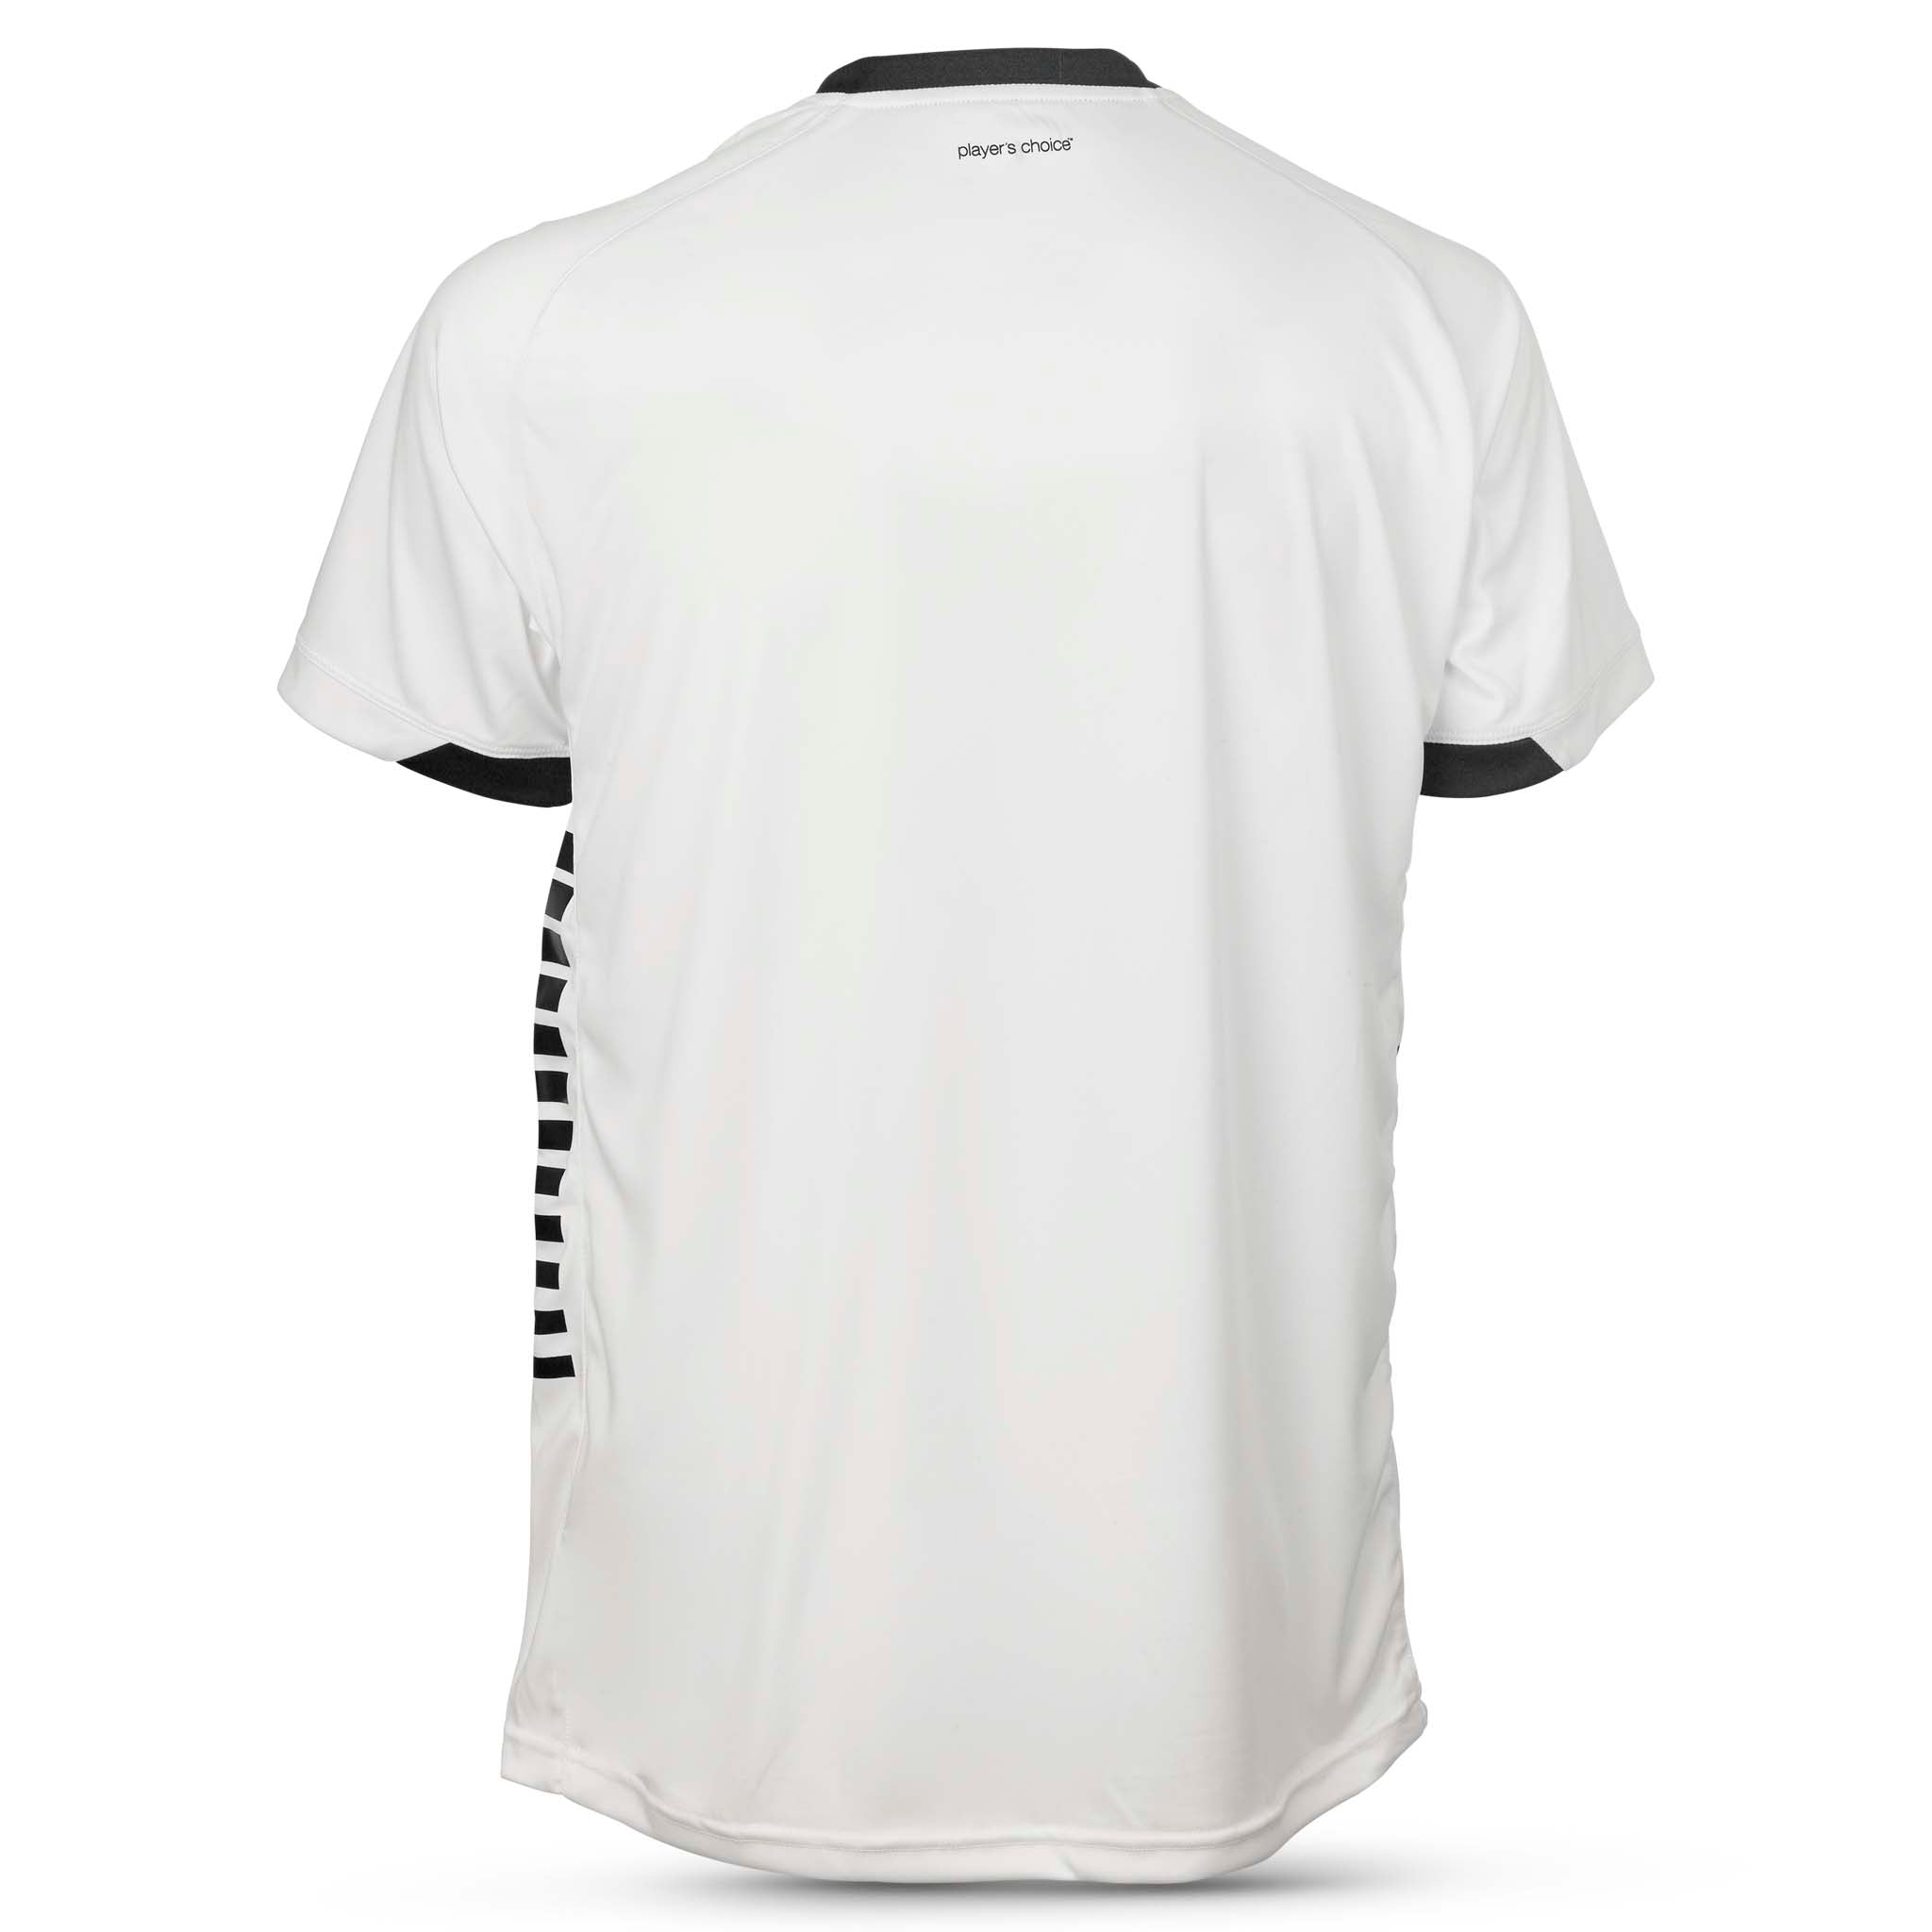 Spain Short Sleeve player shirt #colour_white/black #colour_white/black